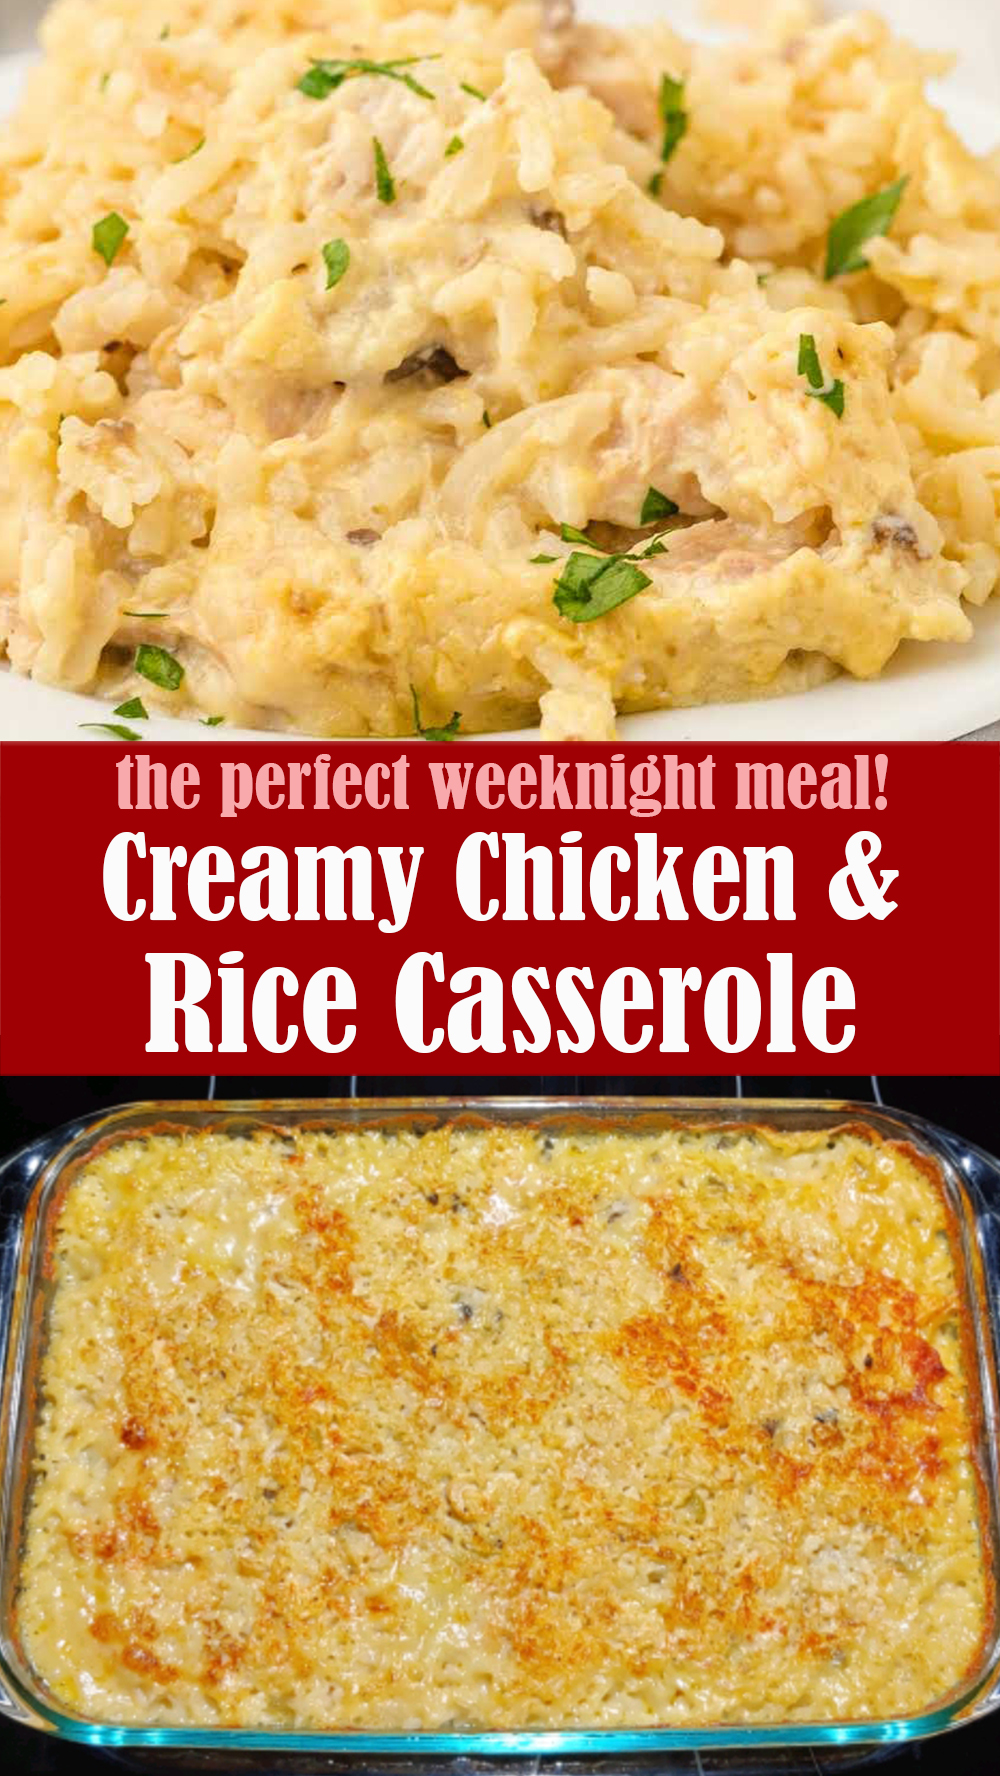 Creamy Chicken and Rice Casserole